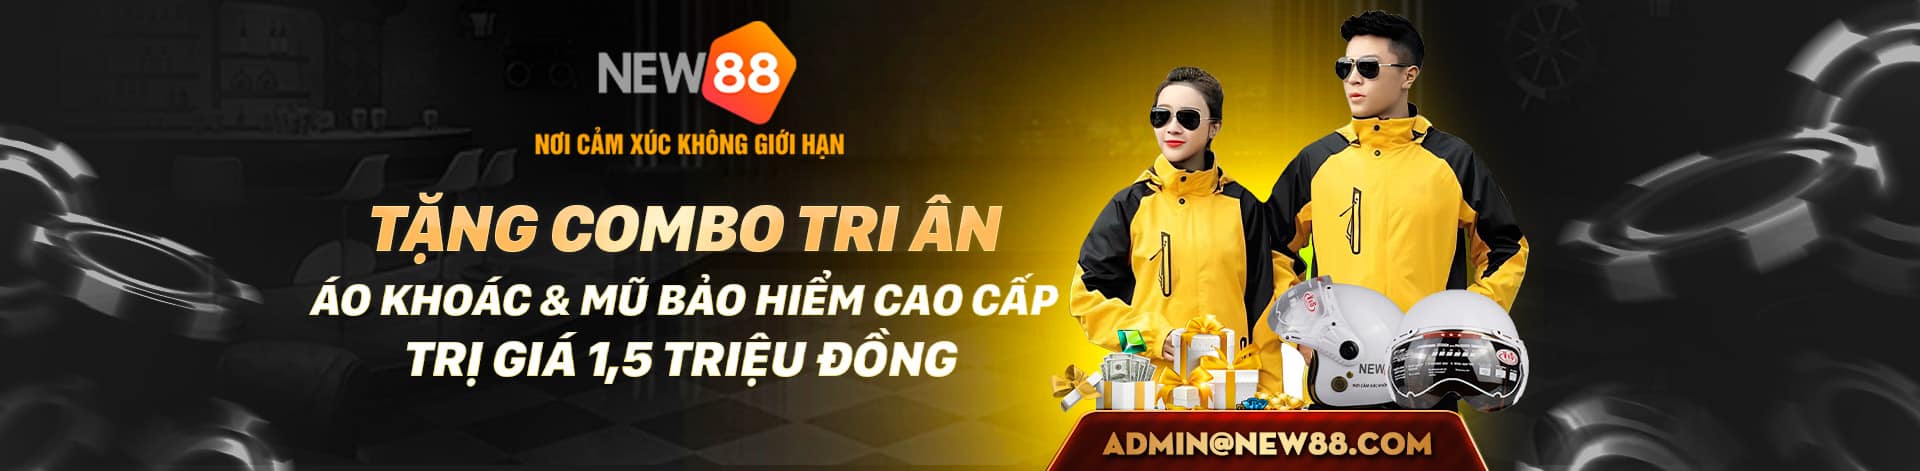 tang combo tri an - New88 Casino